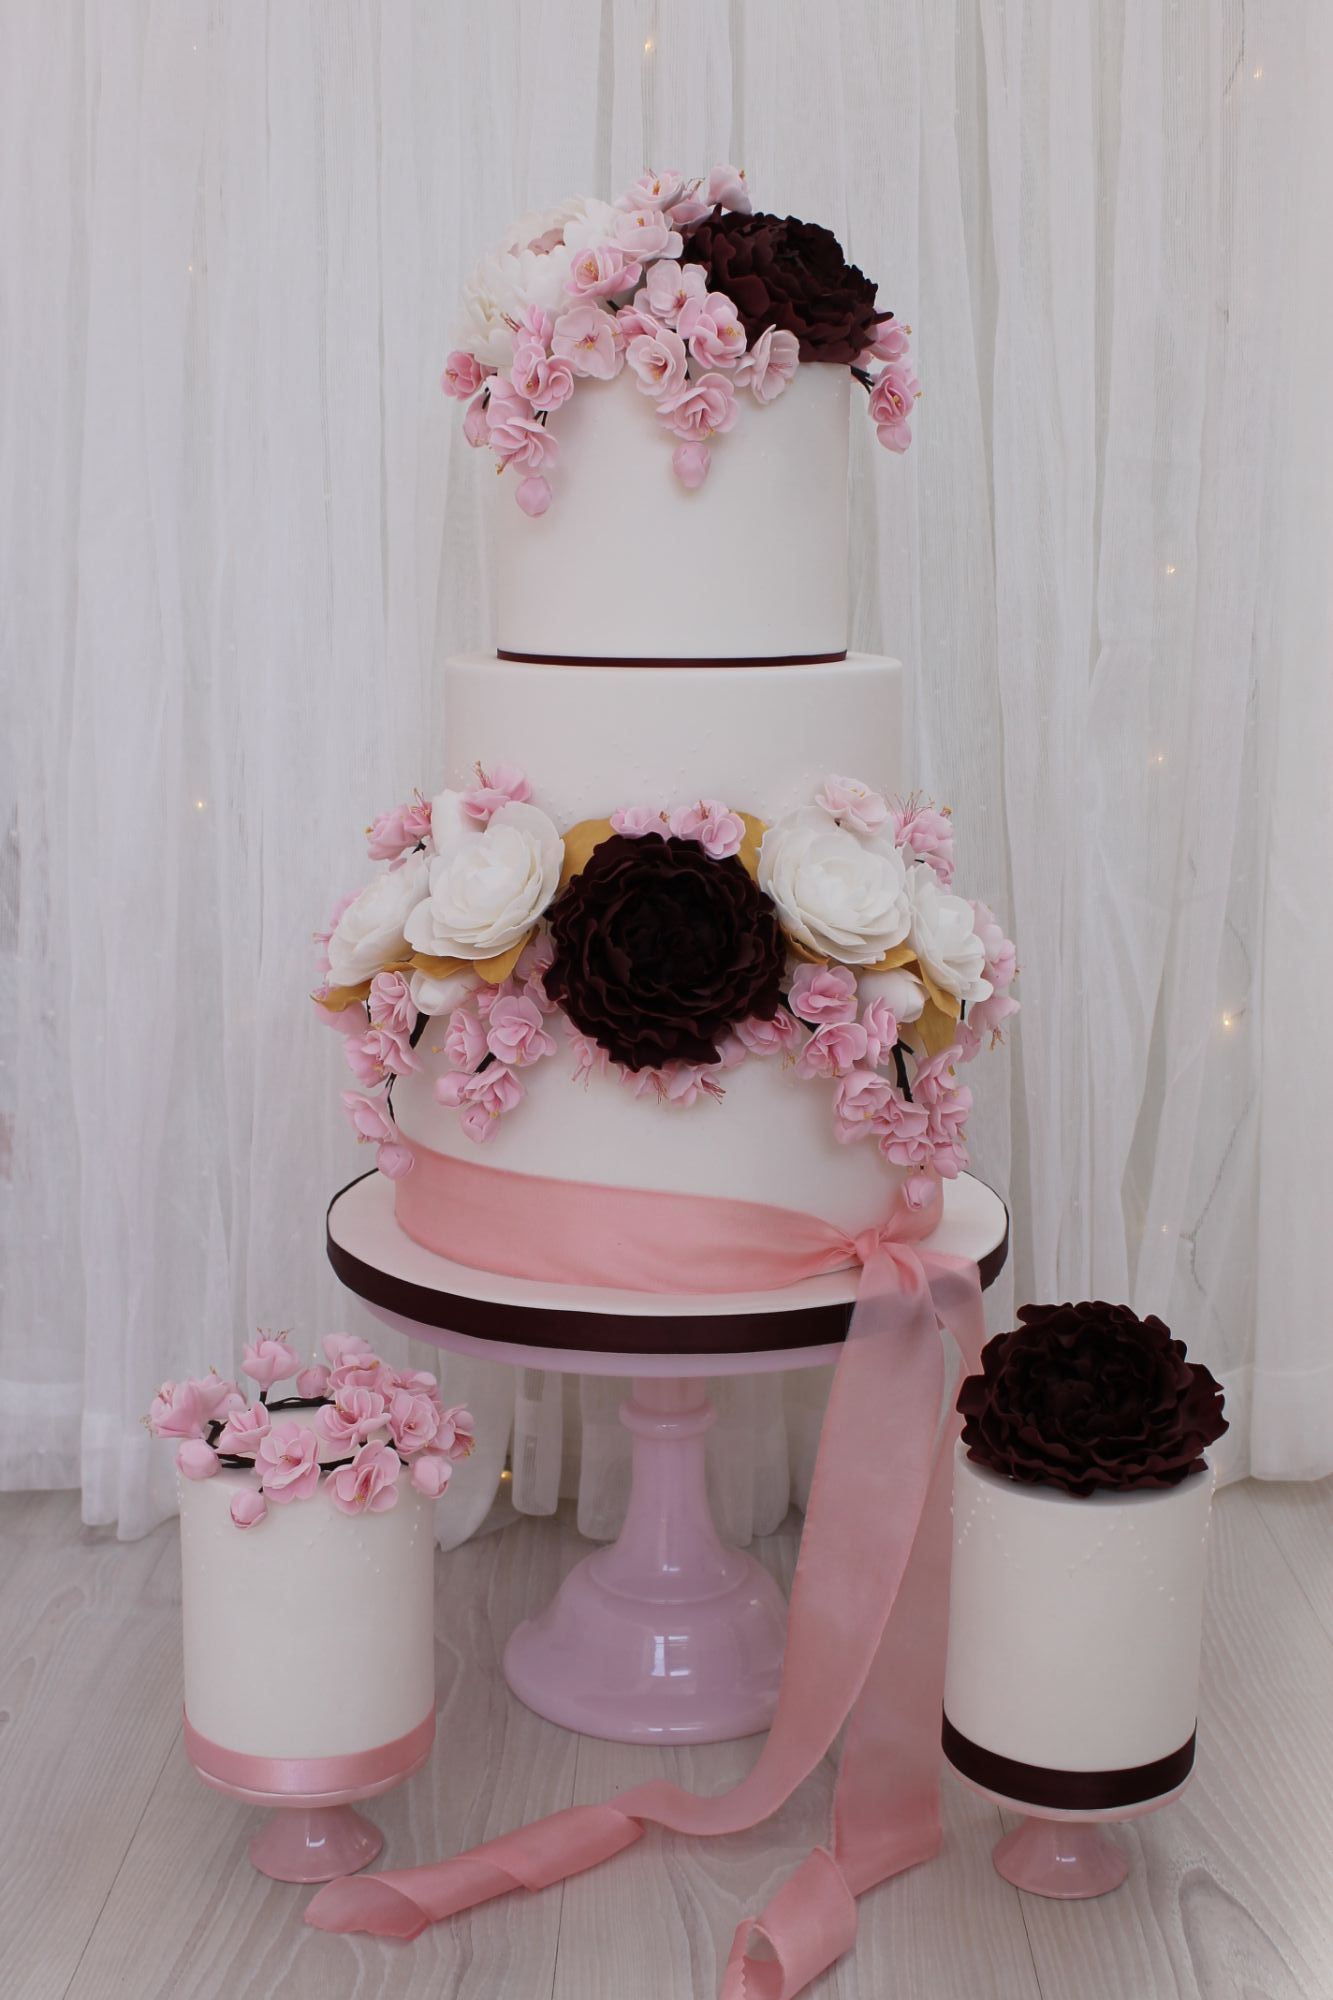 Helen Jane Cake Design, Christchurch, Dorset - wedding cakes (12)